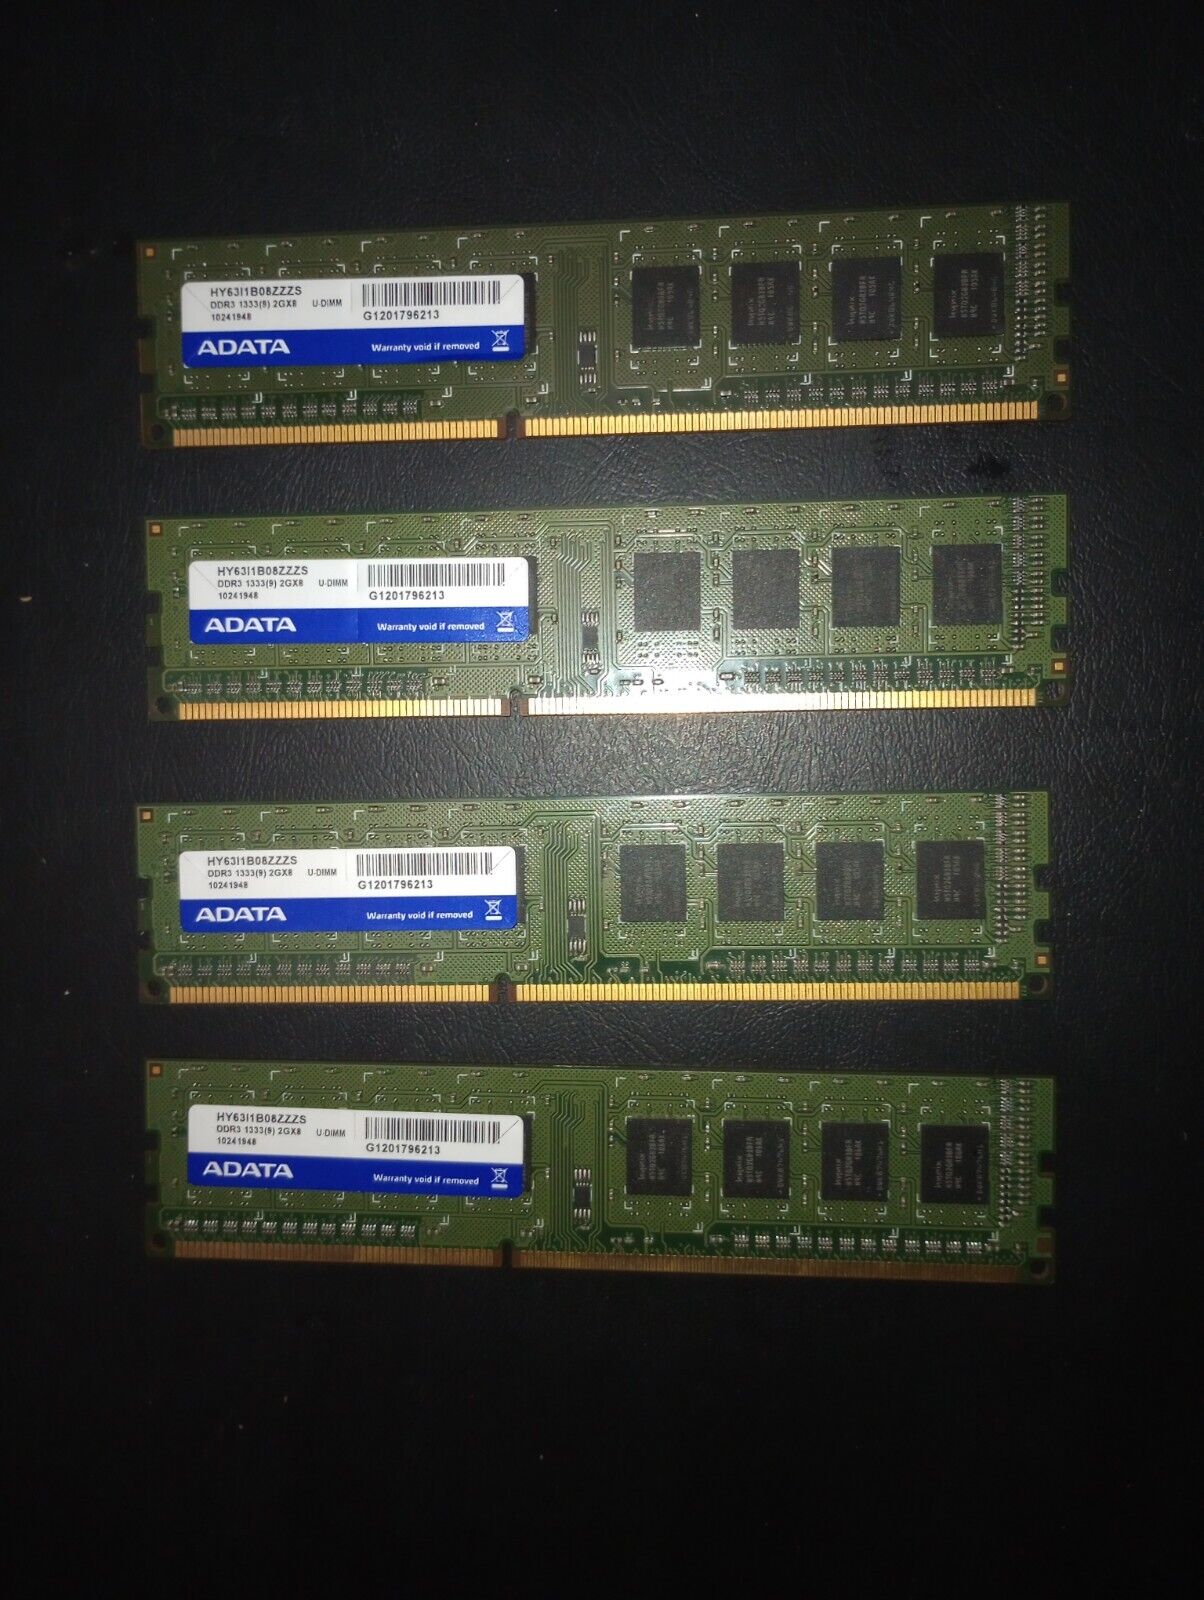 ADATA DDR3  RAM  2GB X 8  1333(9)  1024 1948 U-DIMM- Set Of 4